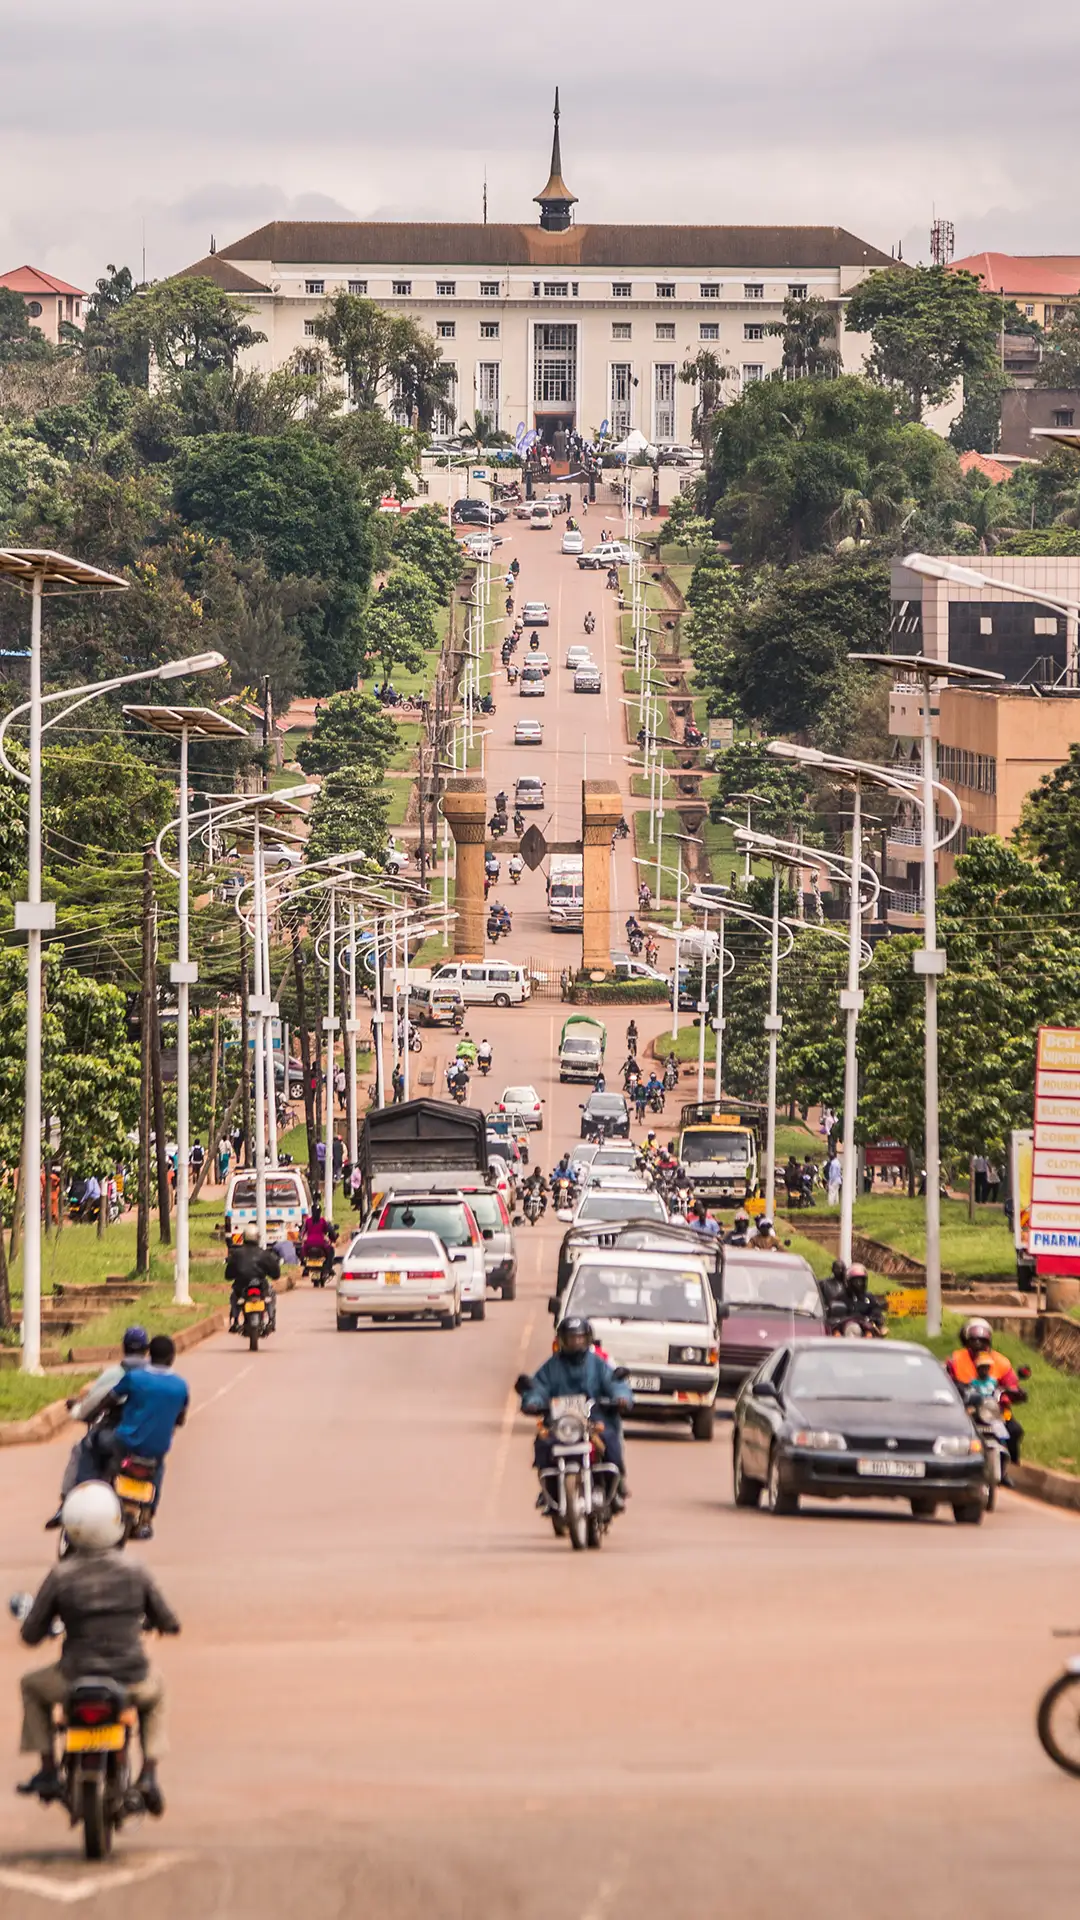 Long straight road to Parliament House in Kampala, Uganda.